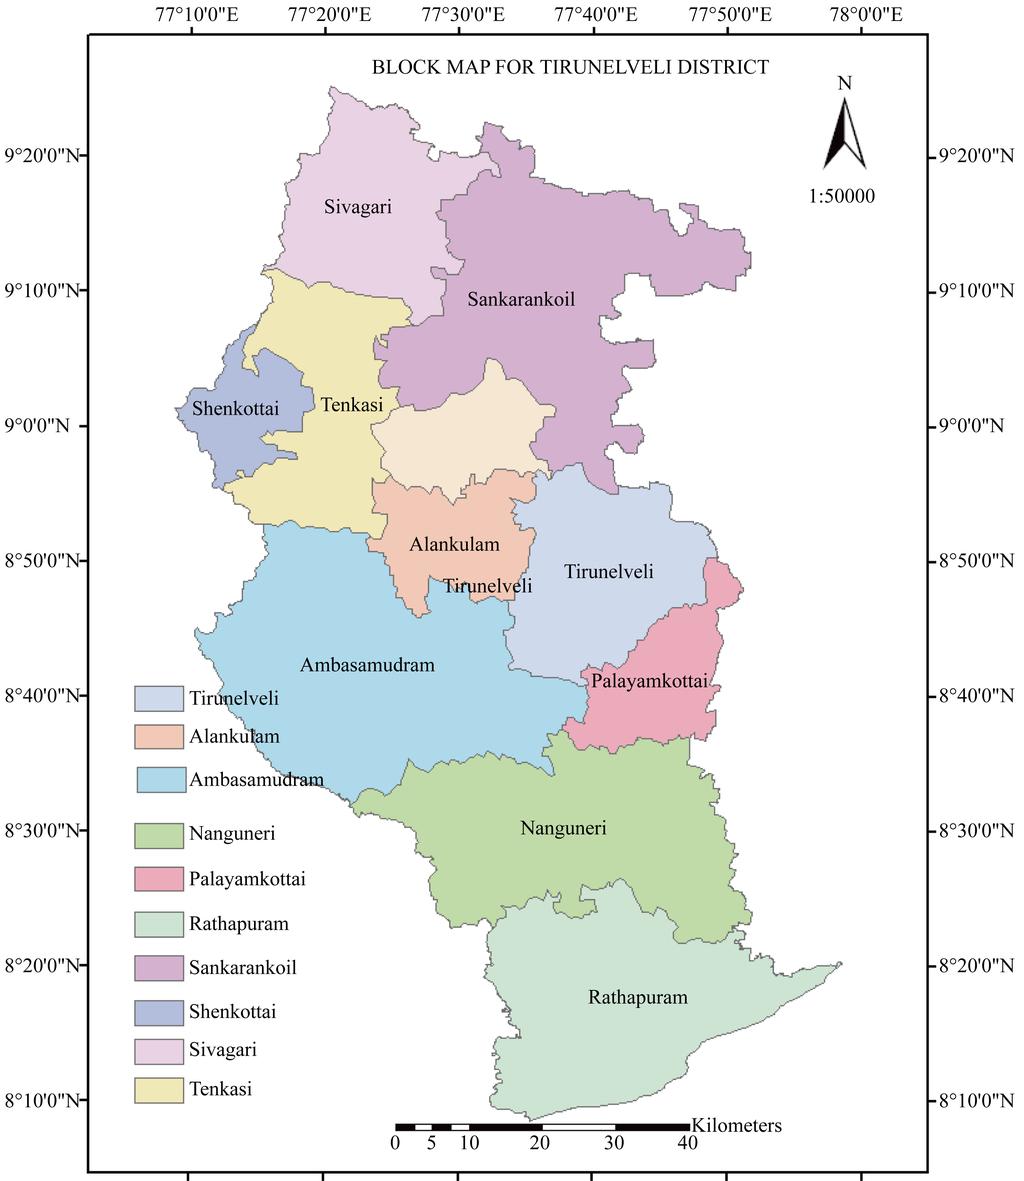 Figure 5. Block map for Tirunelveli district.